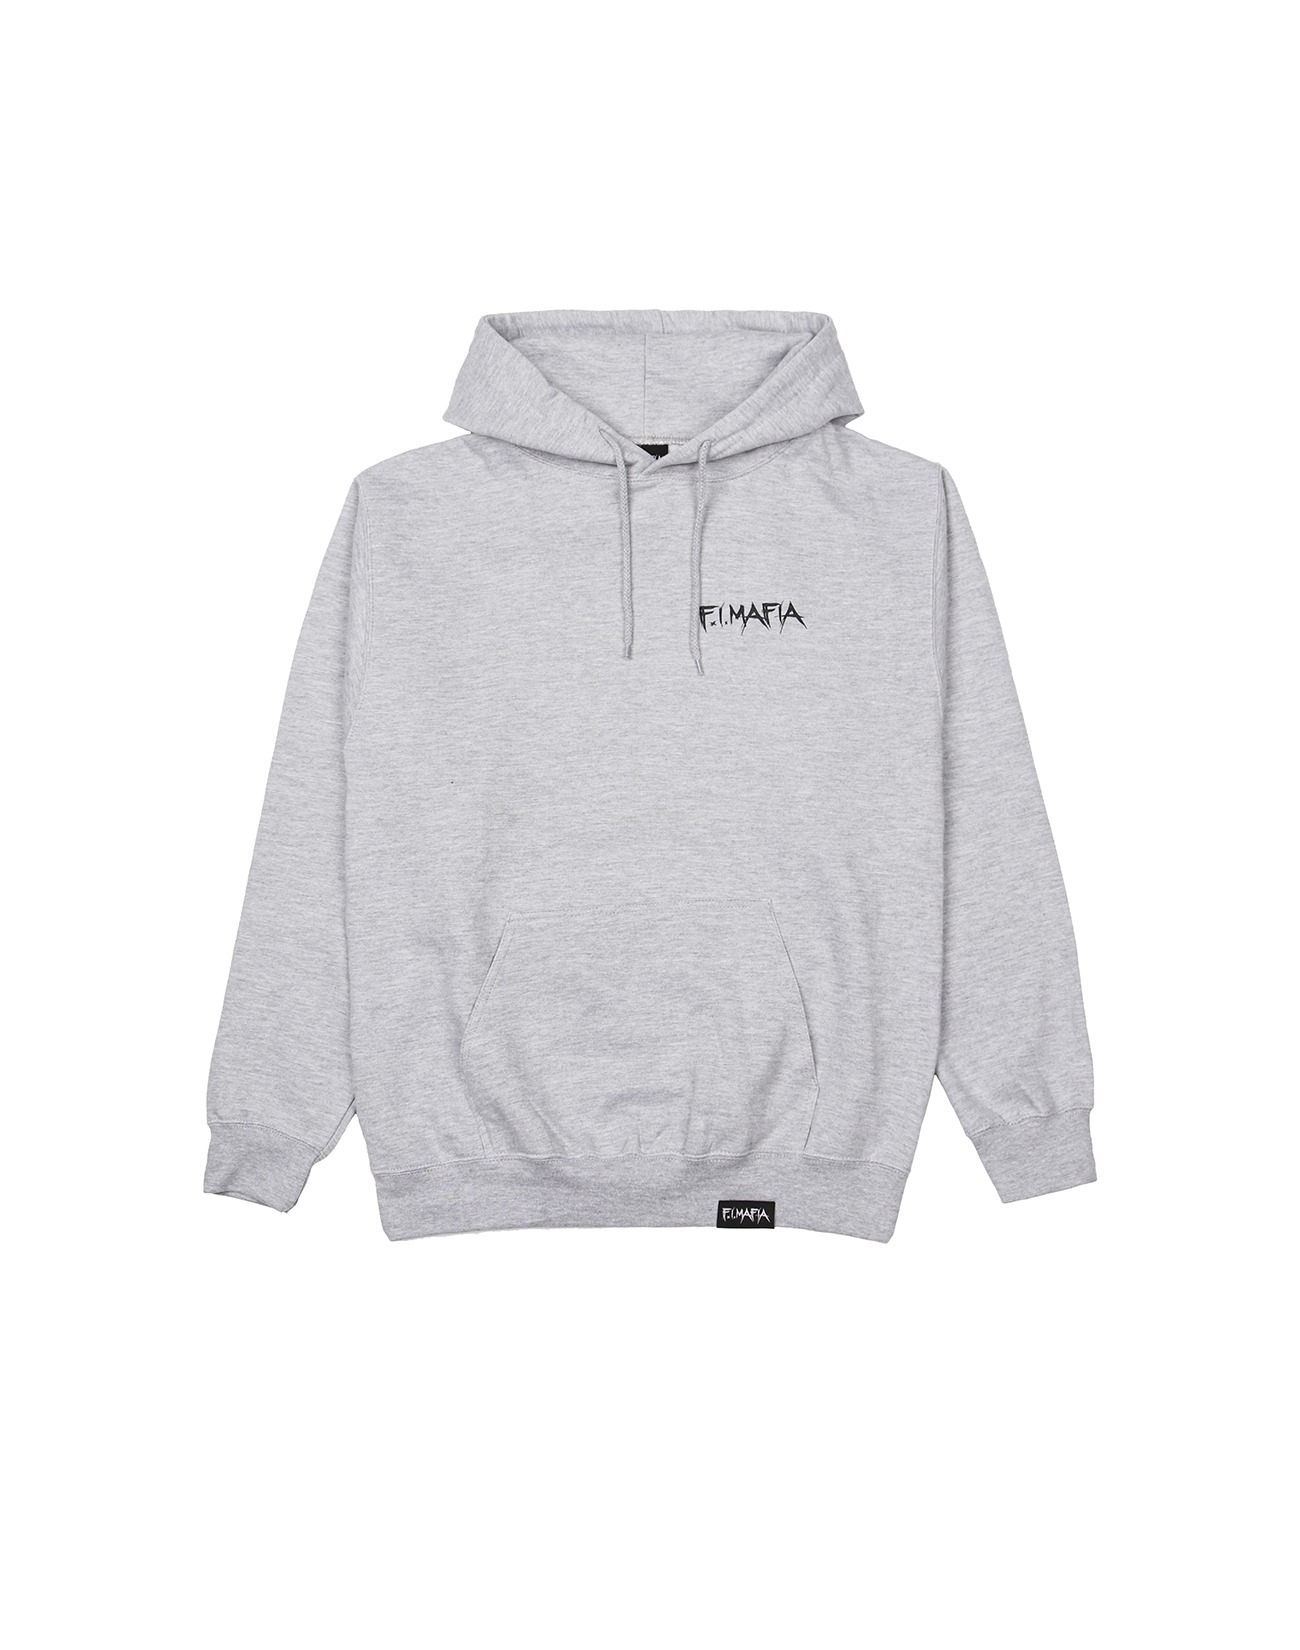 MAF hoodie gray, F.I.MAFIA, FIMAFIA, SNOWBOARD, 스노우보드